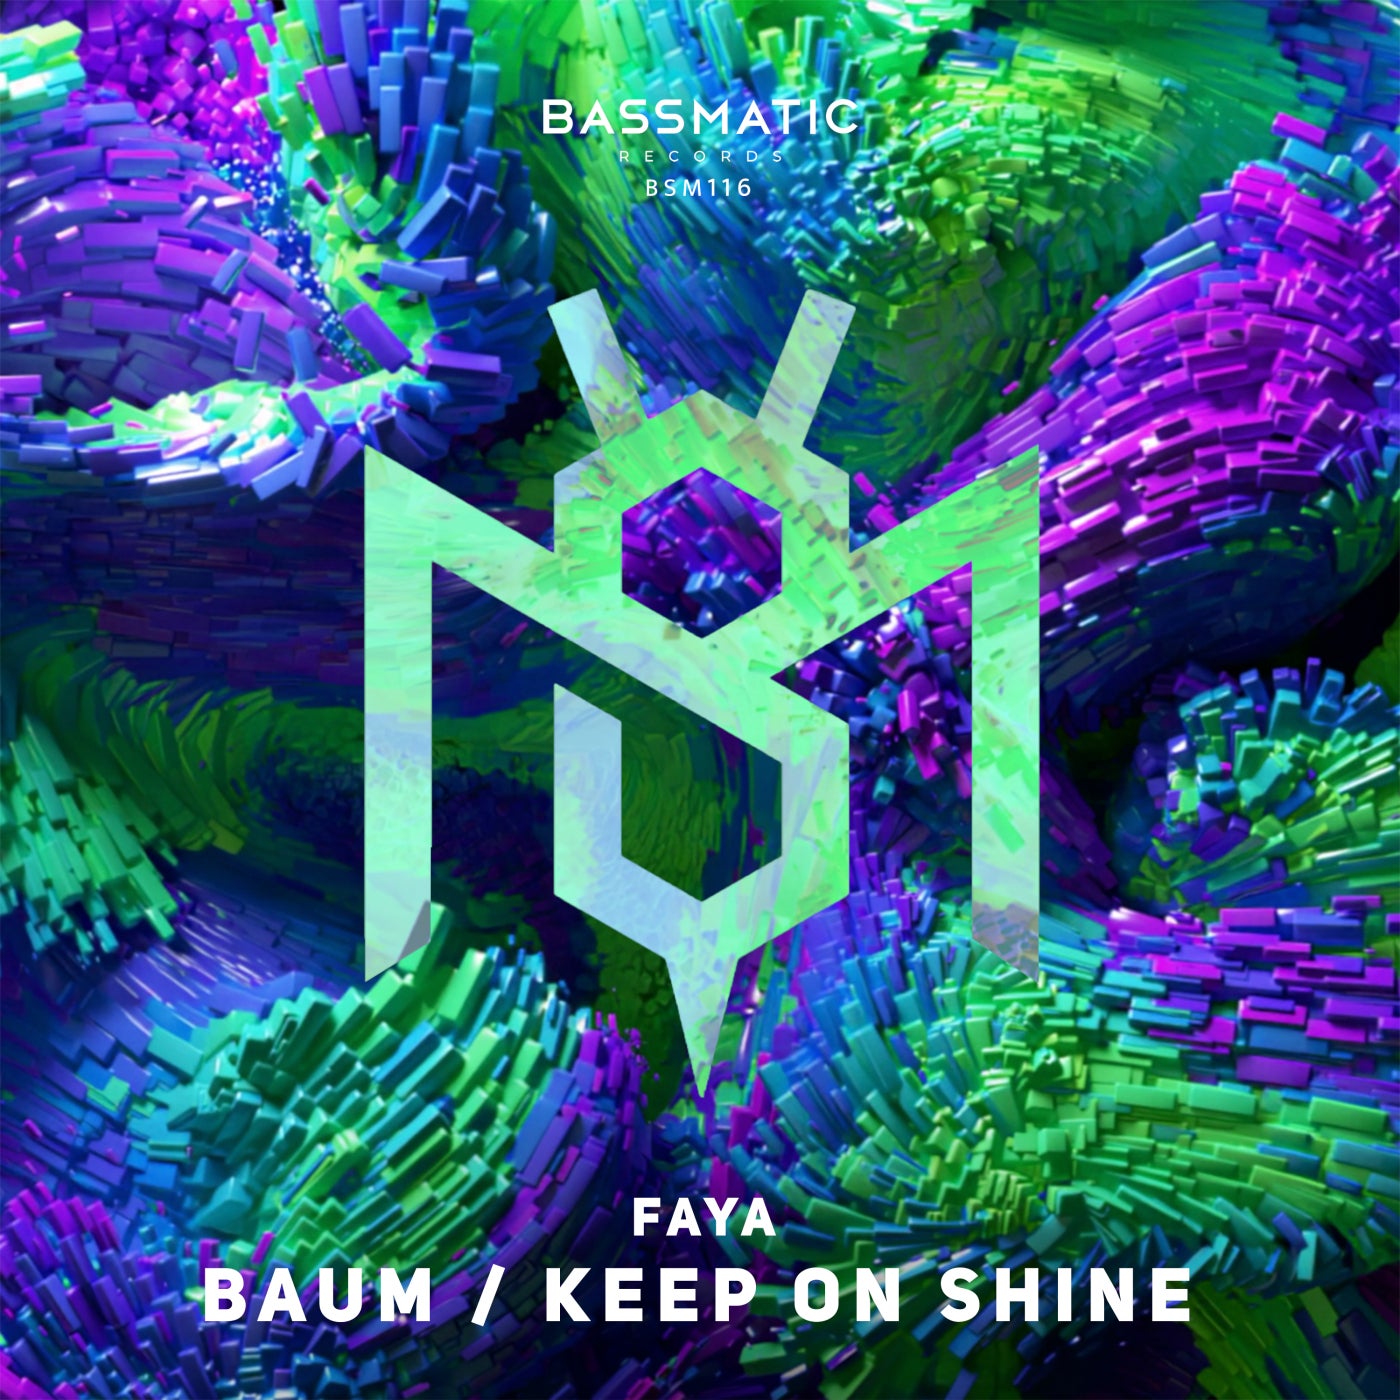 image cover: Faya - Baum / Keep on Shine on Bassmatic records